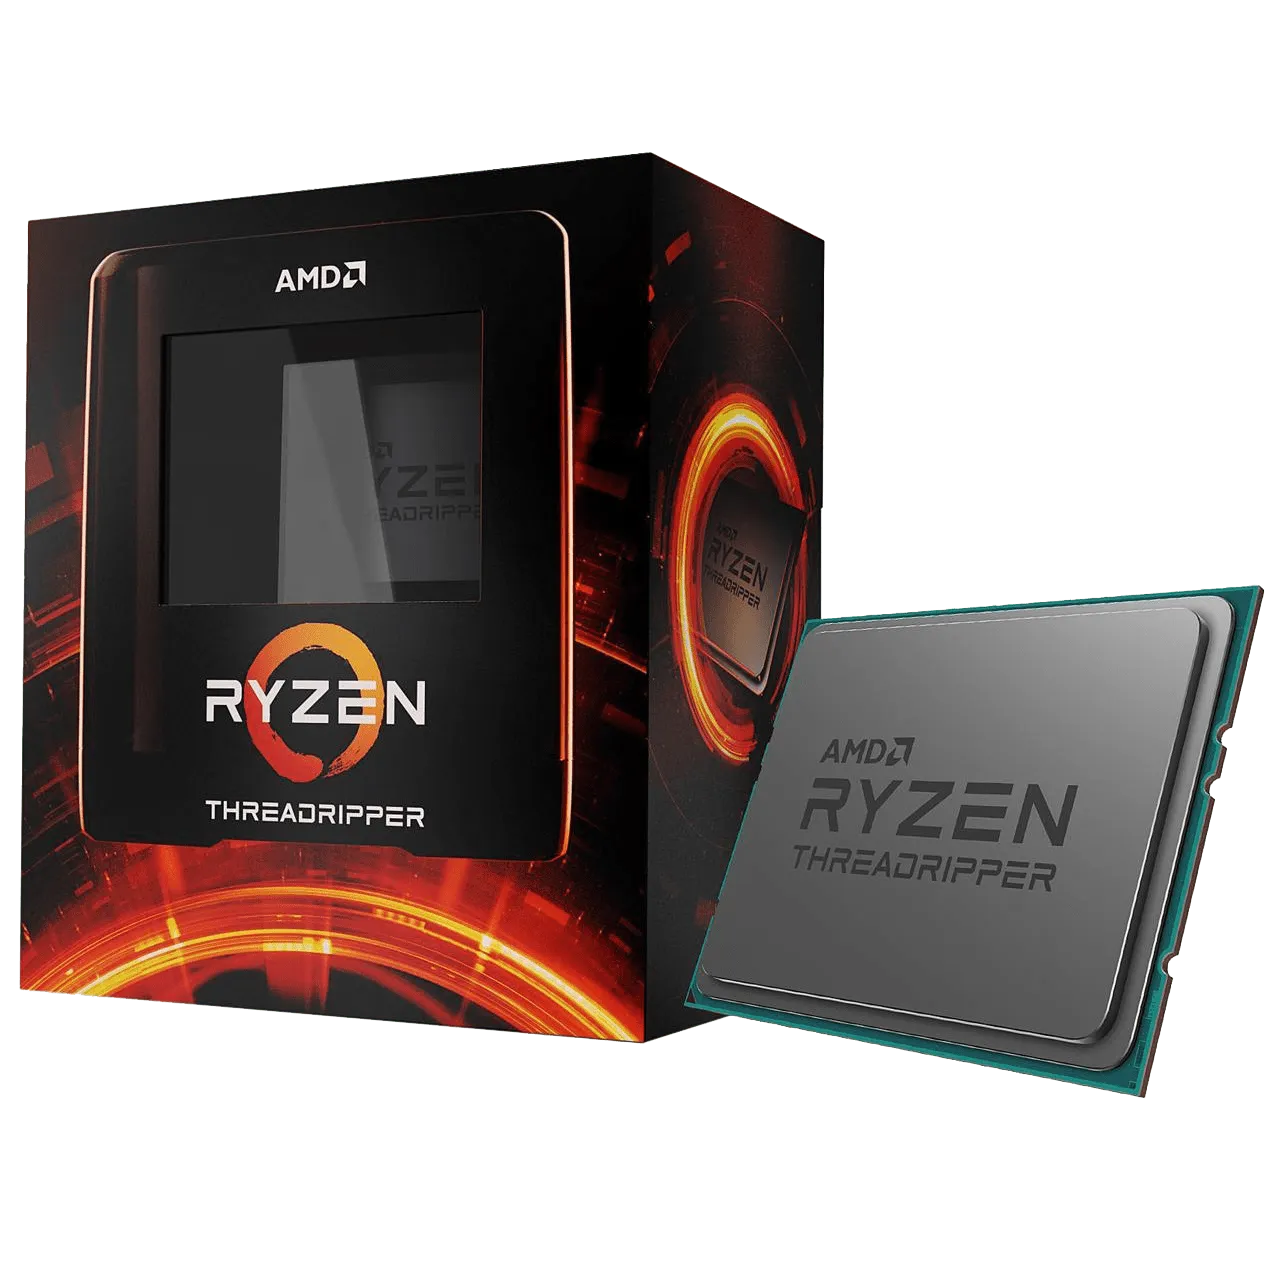 AMD RYZEN THREADRIPPER 3990X 64-Core, 128-Thread (without cooler)